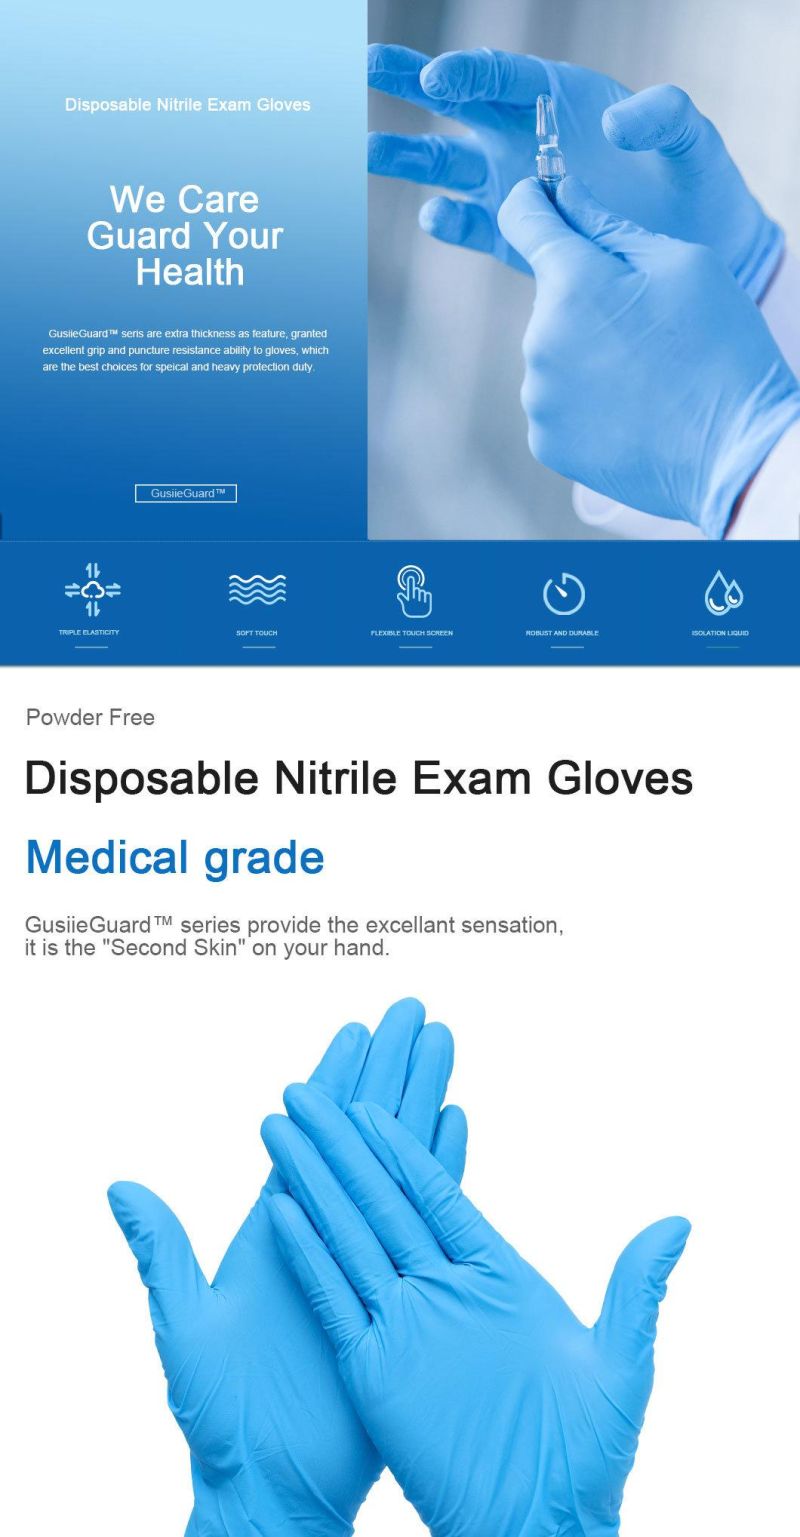 Cheap Price 100PCS Box Disposable Safety Nitrile Medical Examination Gloves